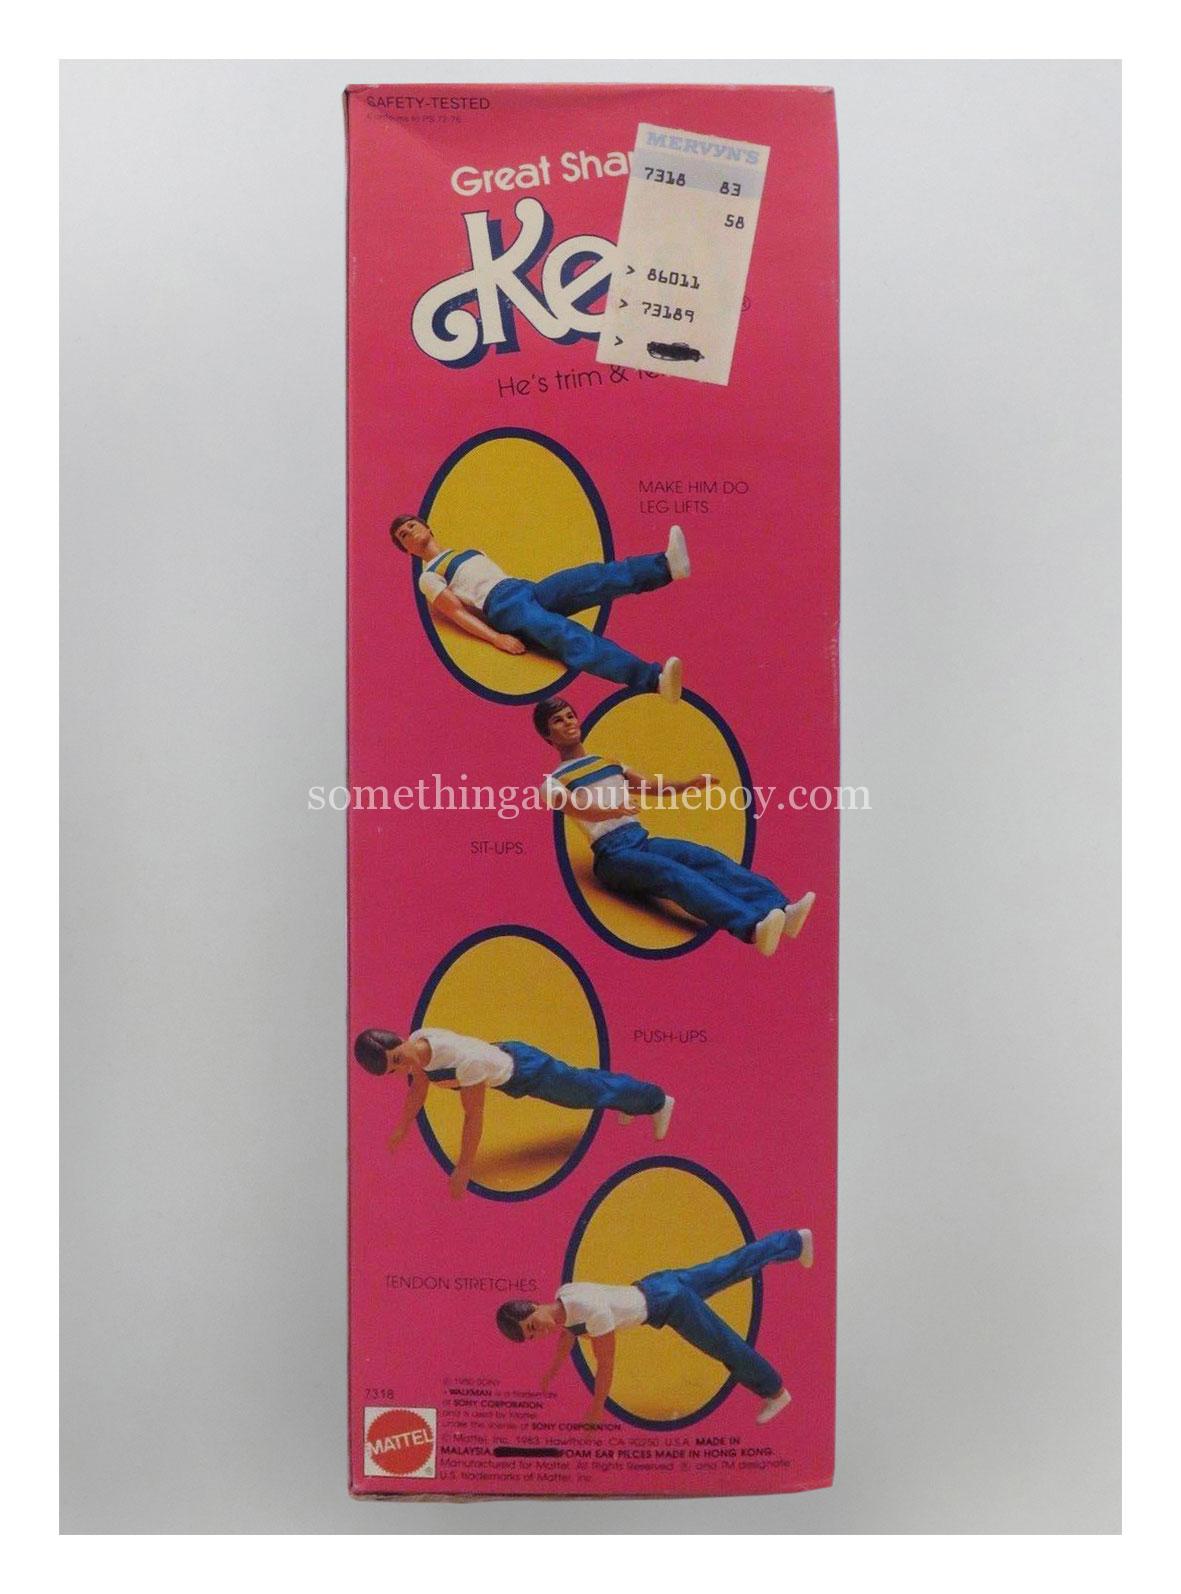 1986 #7318 Great Shape Ken original packaging